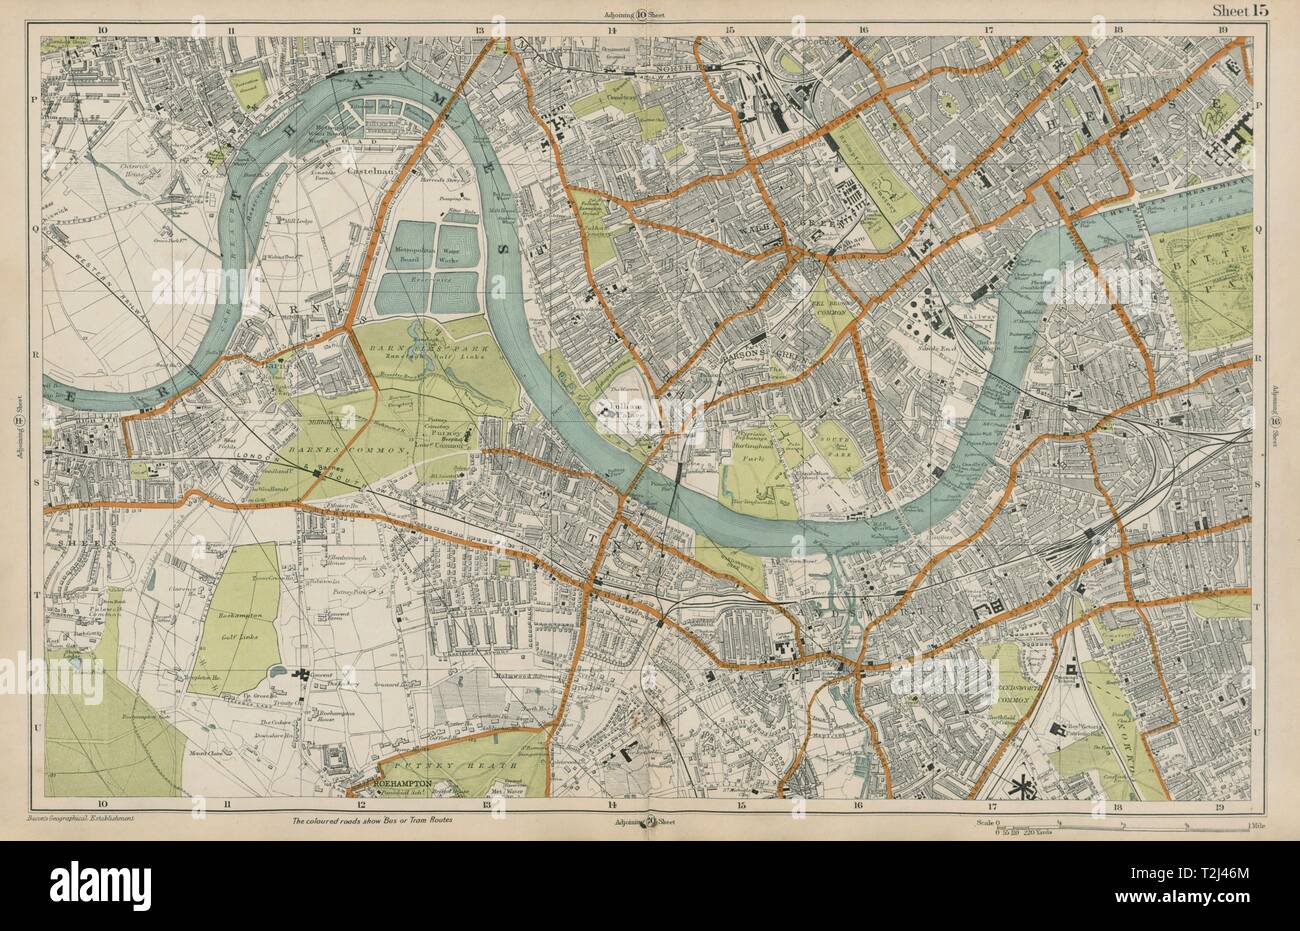 LONDON Chiswick Barnes Fulham Chelsea Putney Wandsworth Clapham. BACON  1919 map Stock Photo